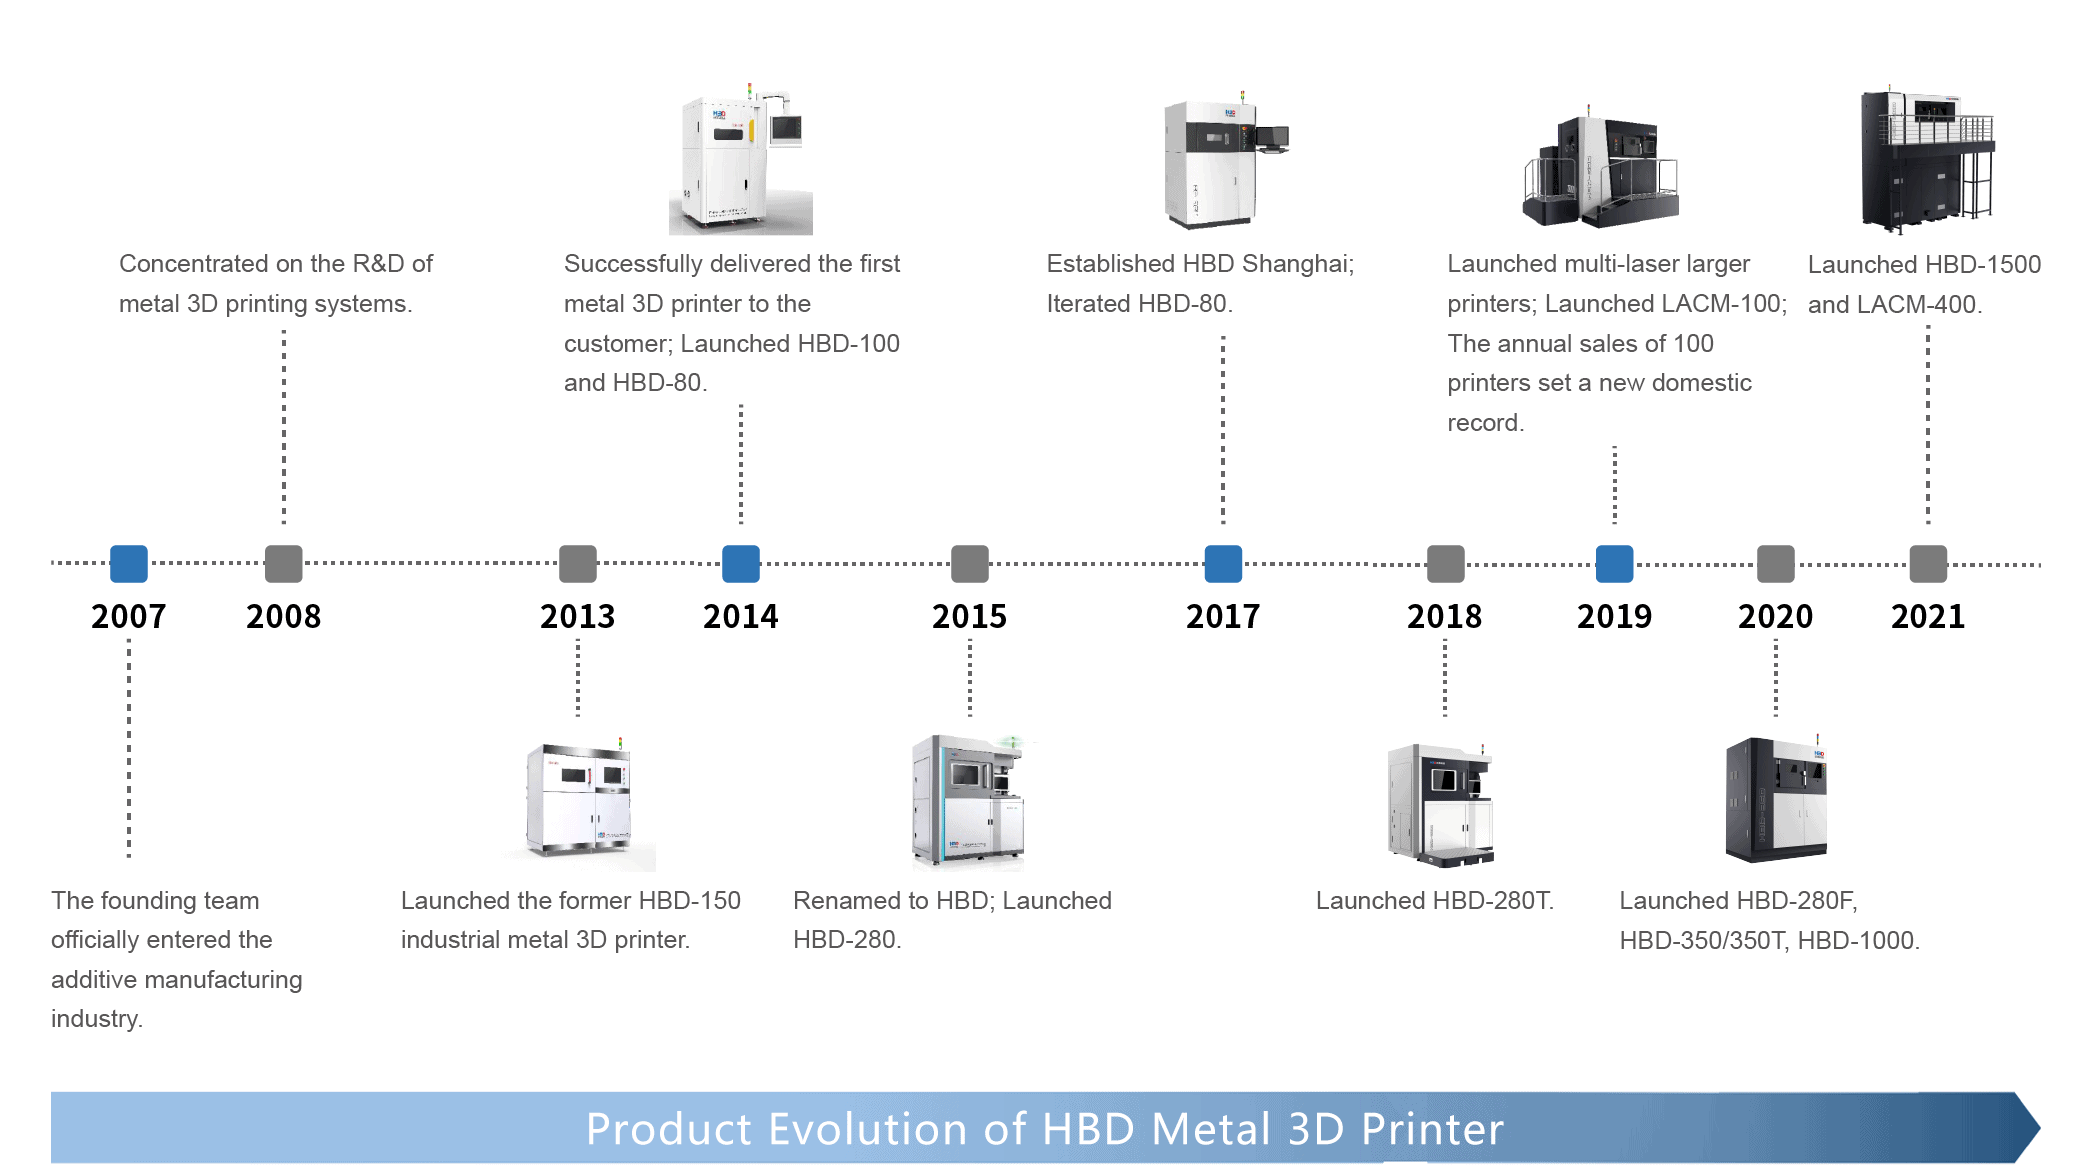 Product Evolution of HBD Metal 3D Printer